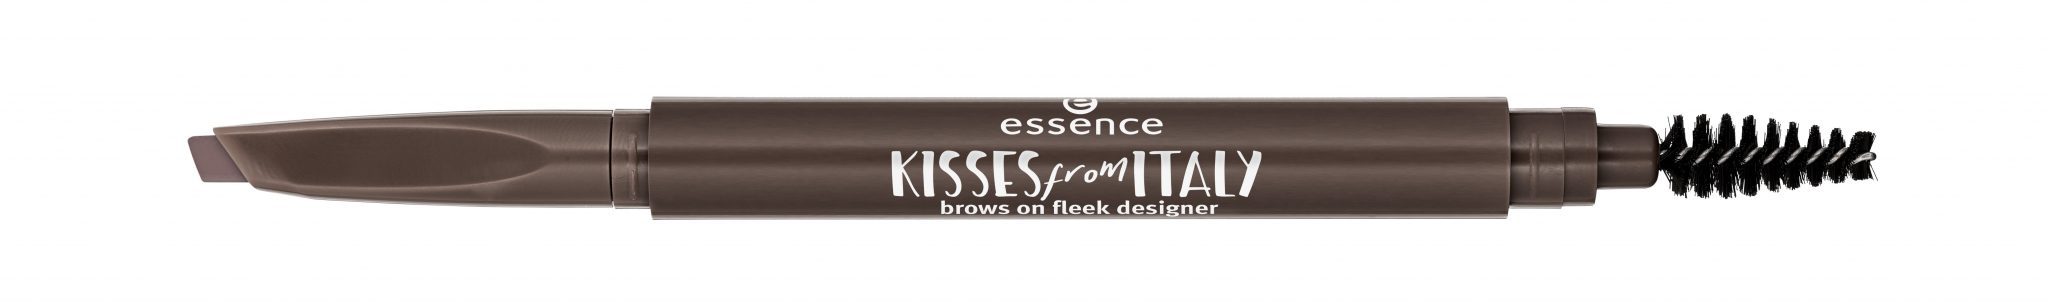 essence kisses from italy brows on fleek designer e1534453990687